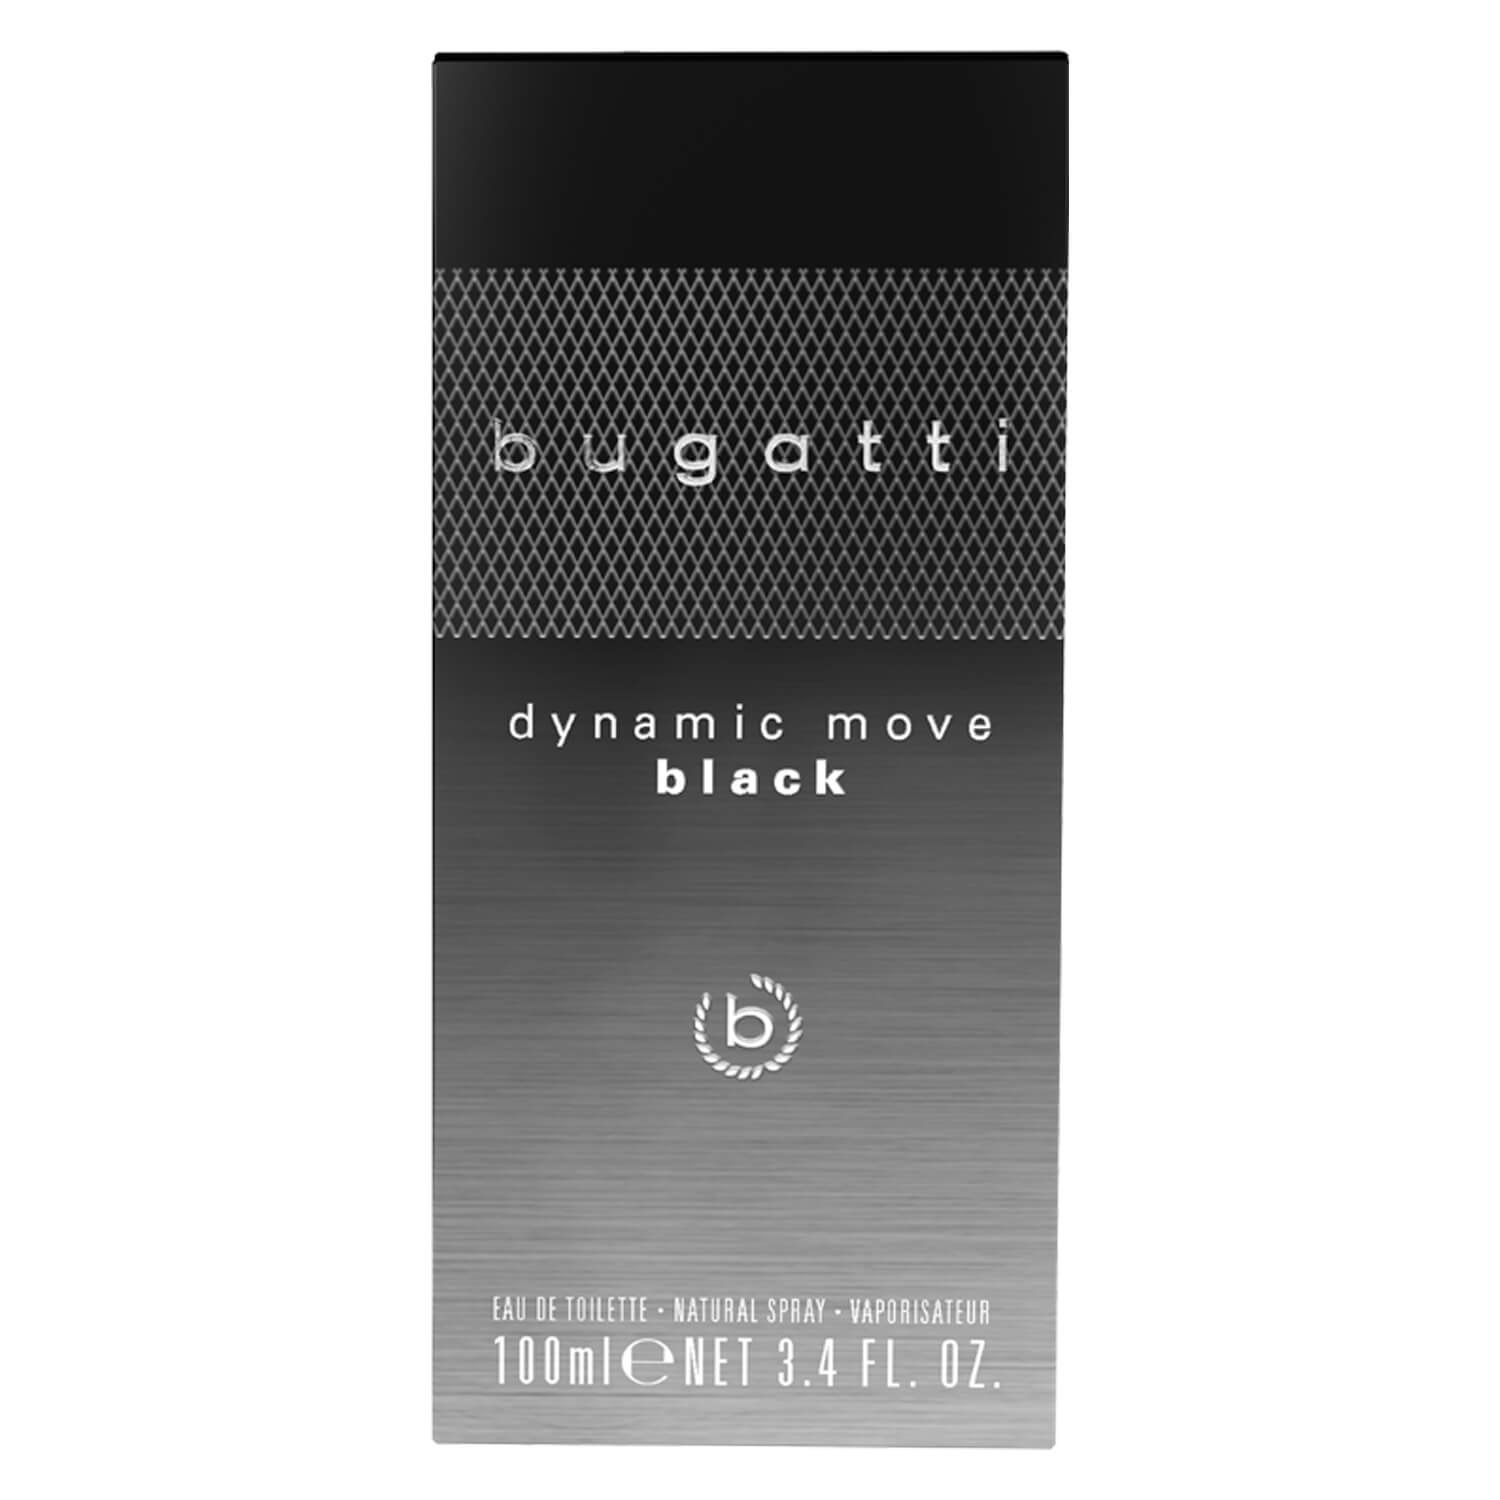 Move Dynamic Toilette de Black Eau bugatti -